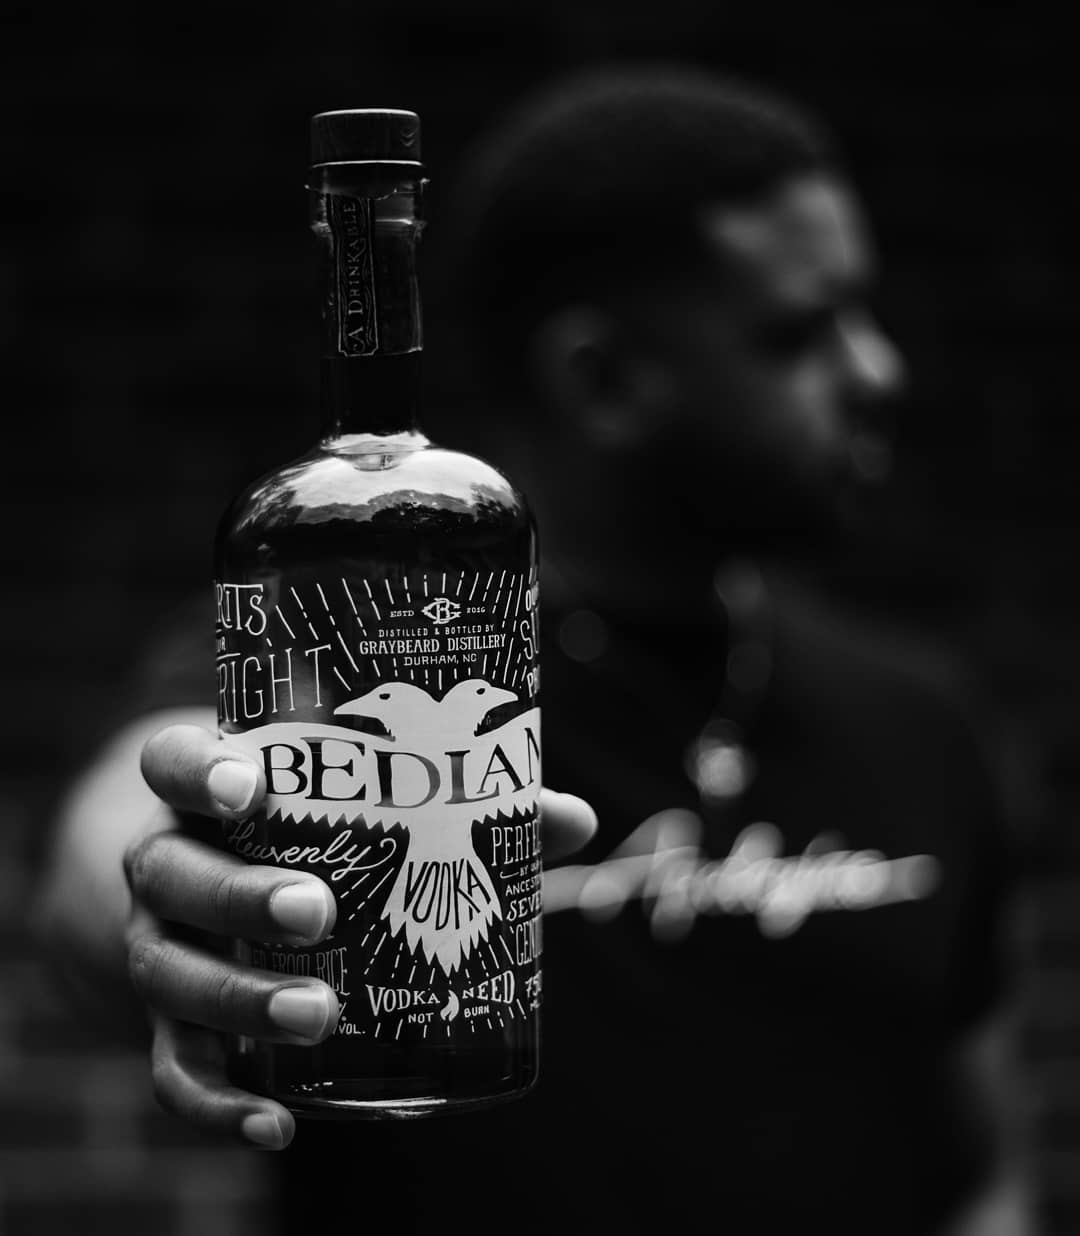 Buy Bedlam Vodka By Jason Derulo Online - Notable Distinction